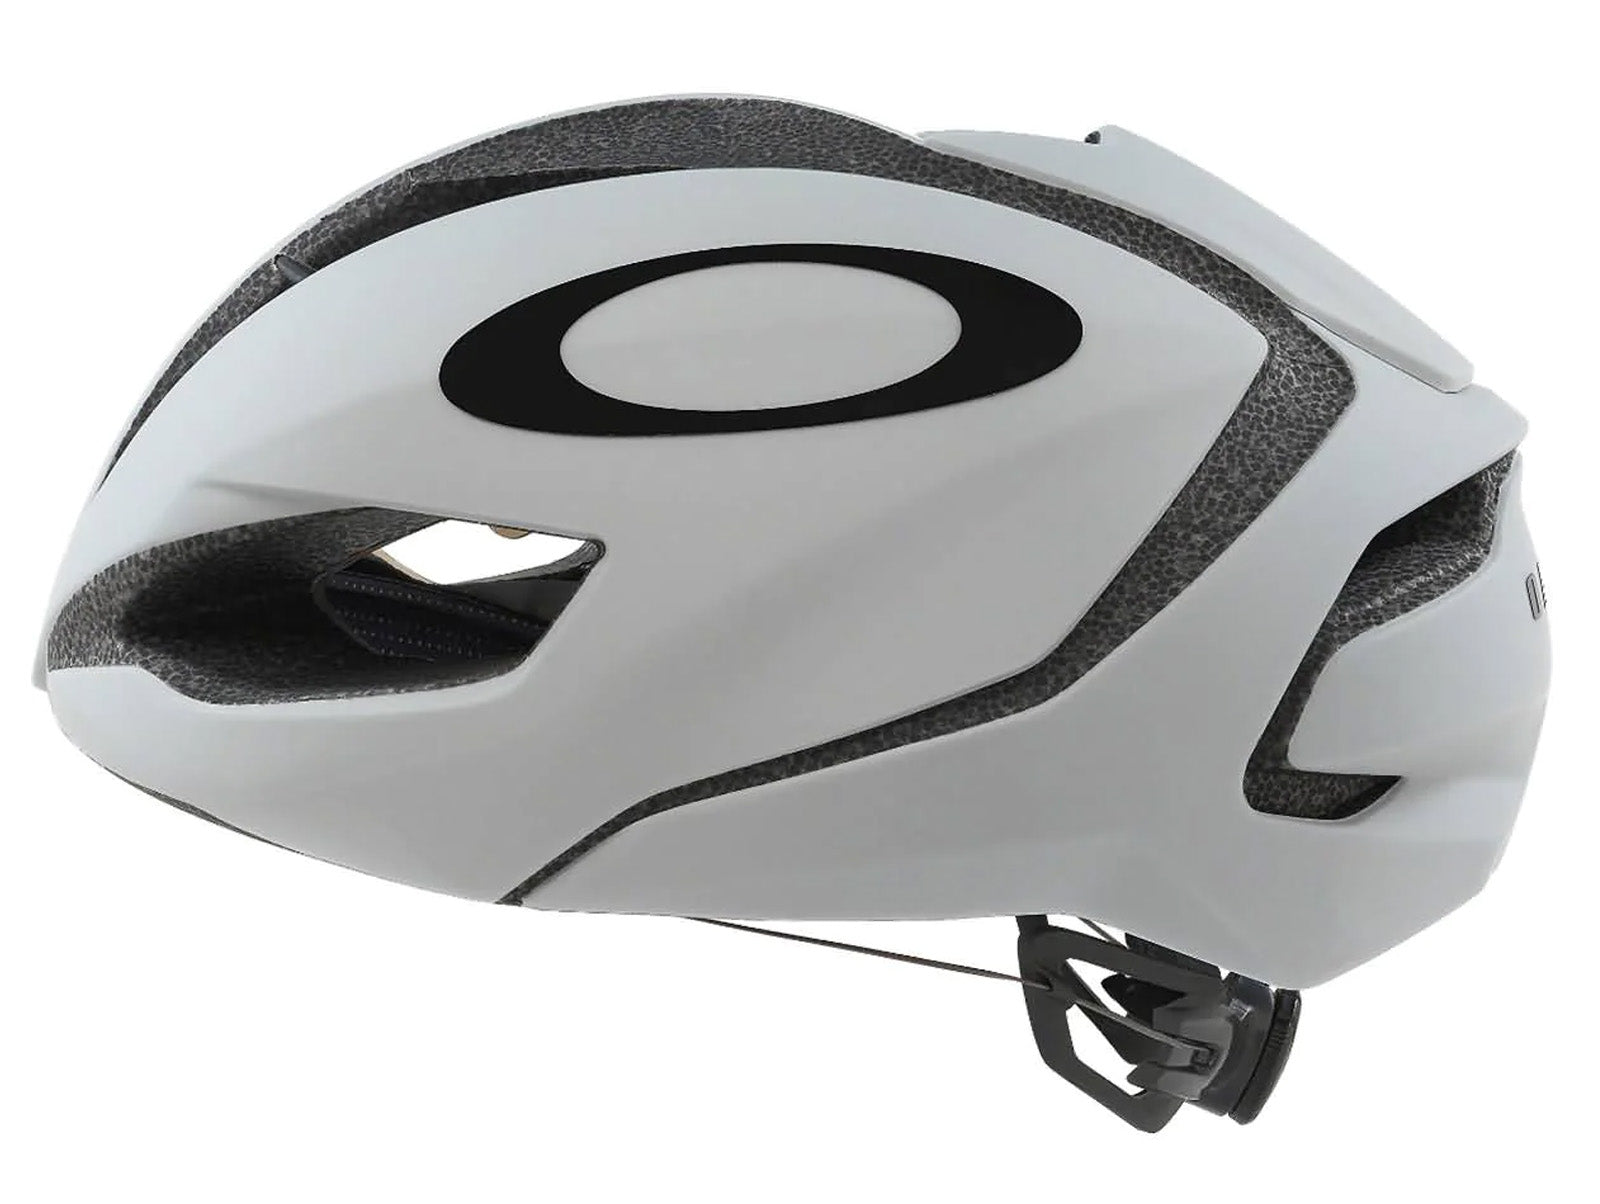 Oakley ARO5 Adult MTB Helmets